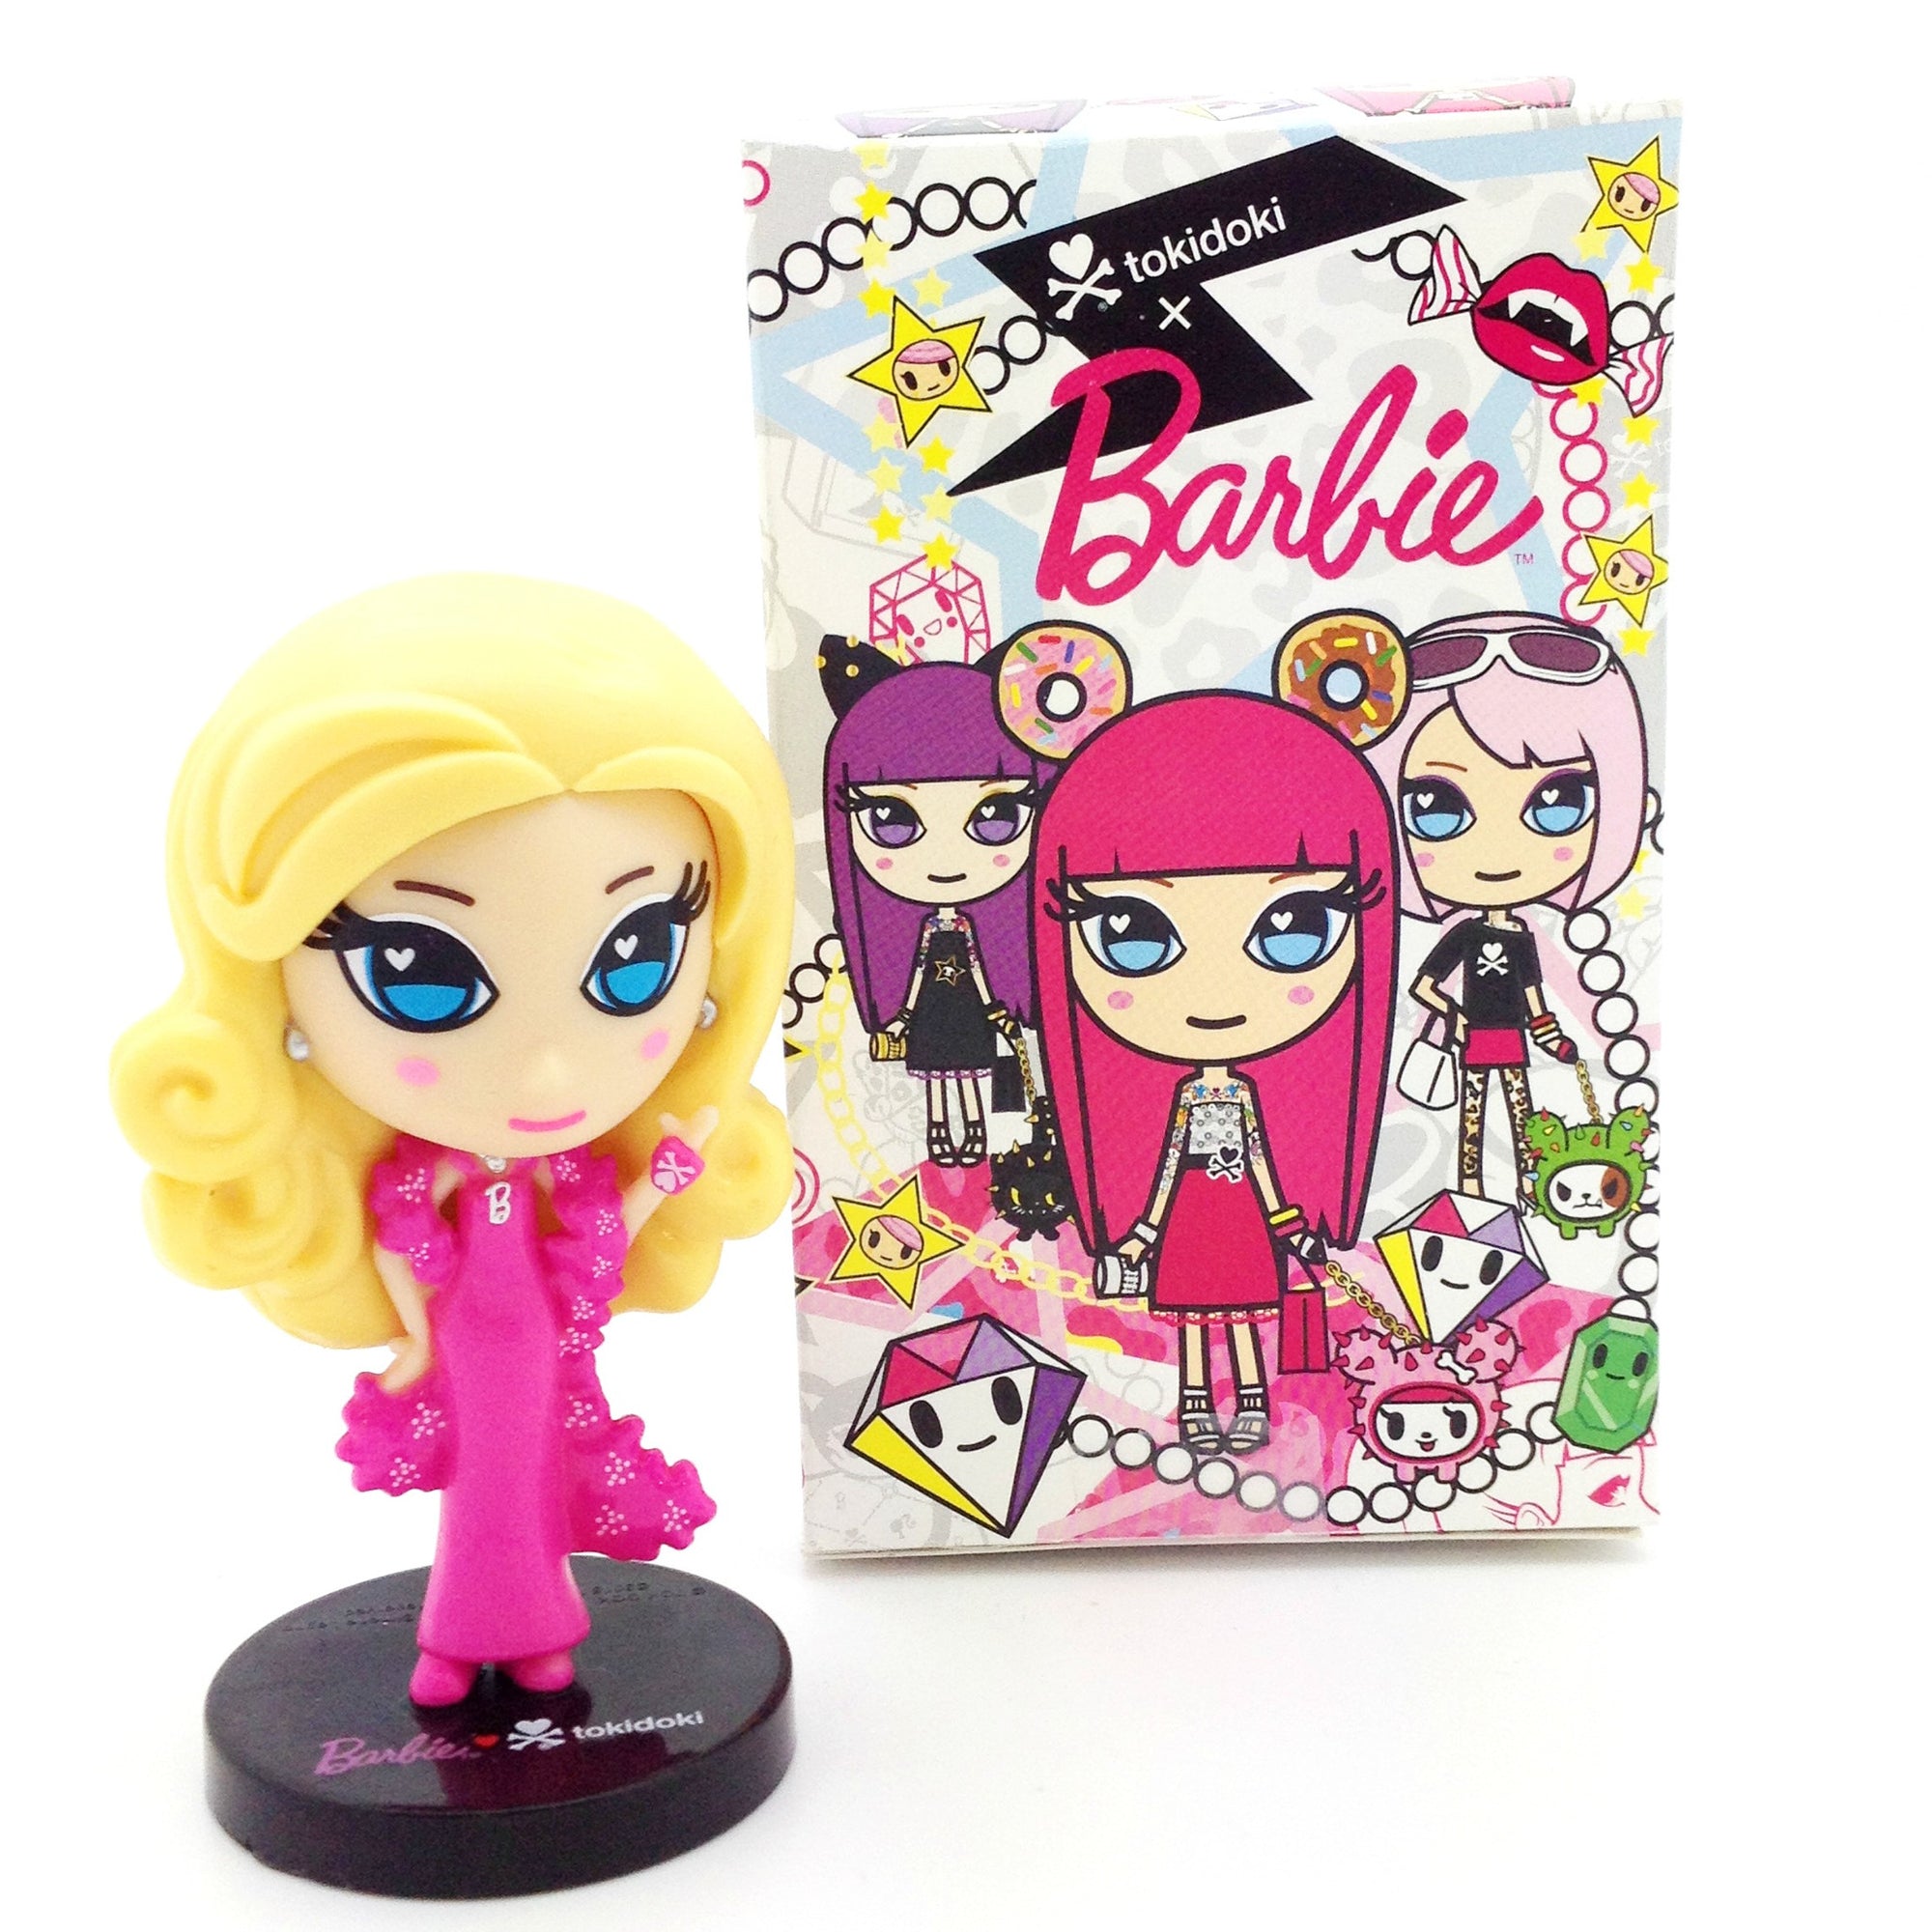 Tokidoki x Barbie Blind Box - Superstar Barbie - Mindzai
 - 2